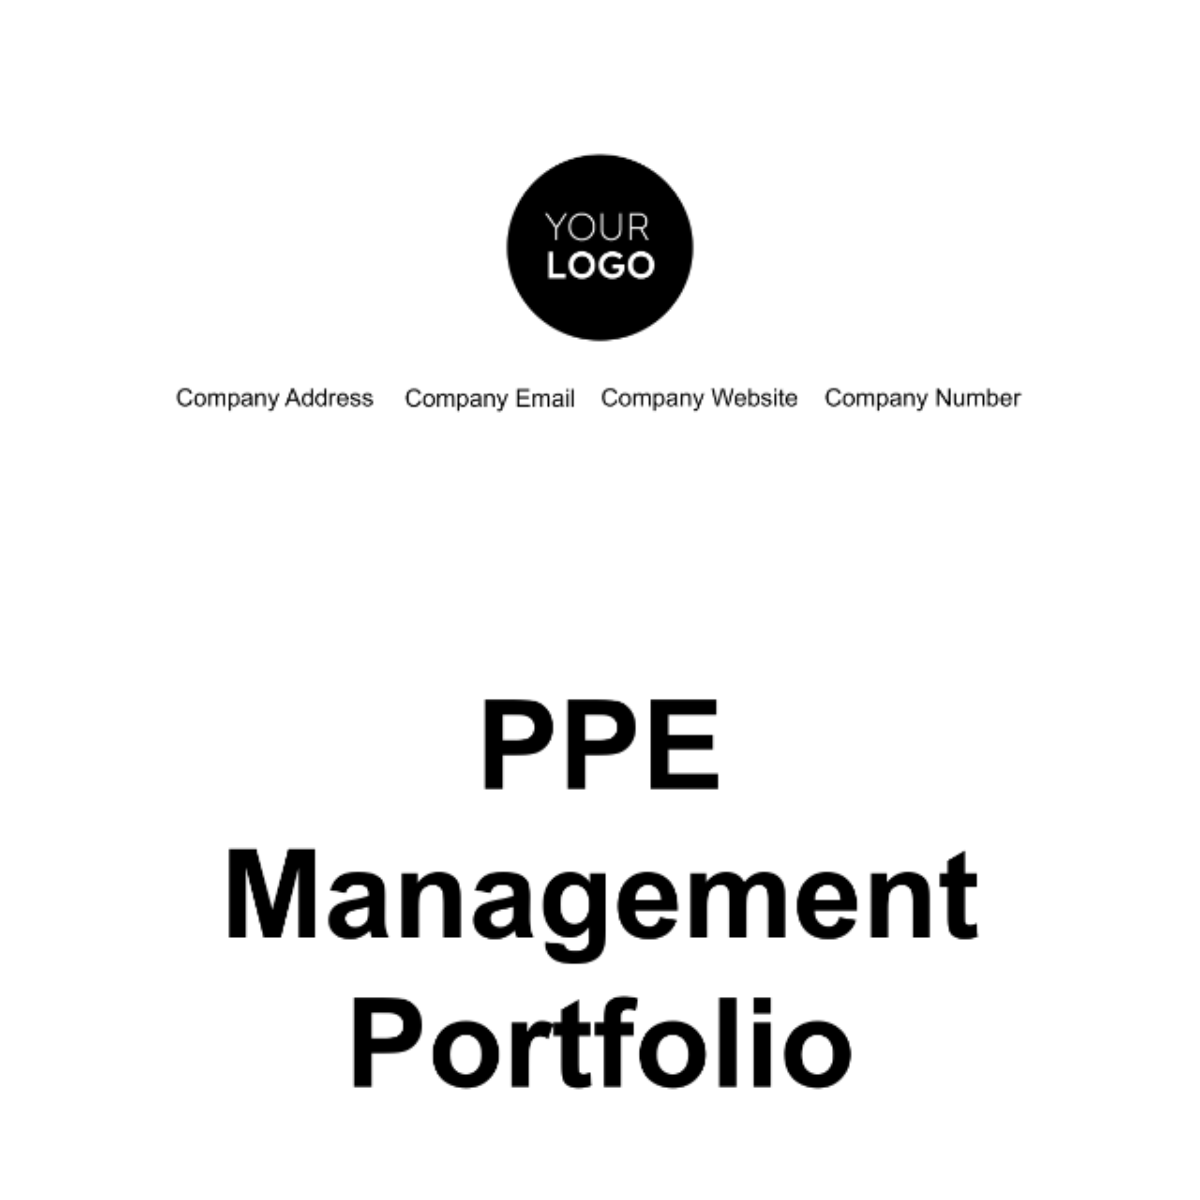 Free PPE Management Portfolio Template